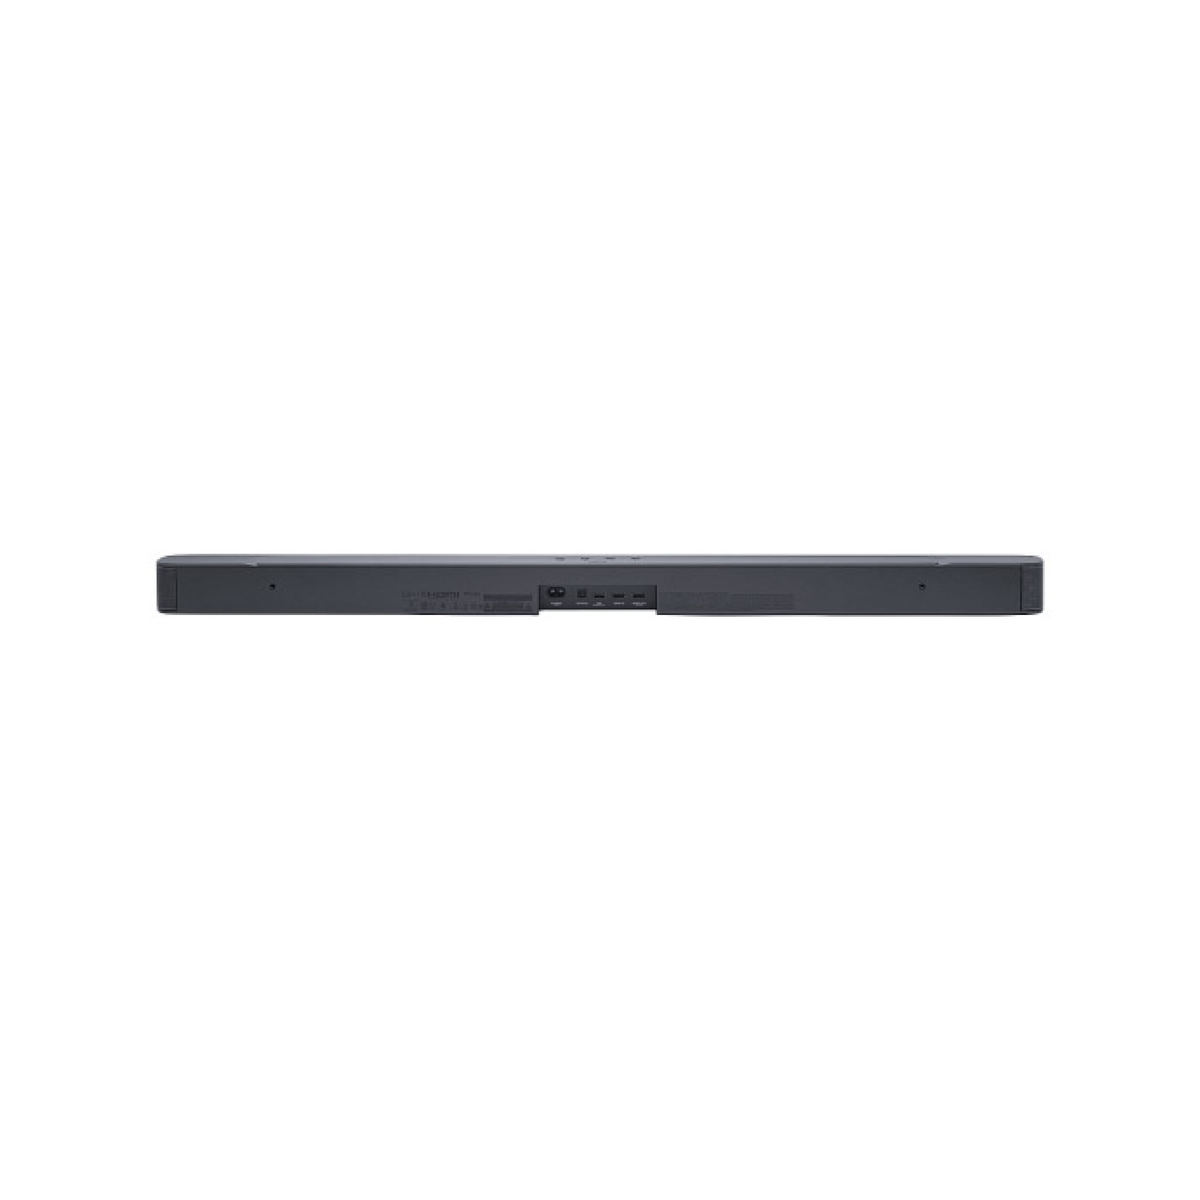 JBL 300 W Bar 2.1 Deep Bass MK2 Channel Soundbar with Wireless Subwoofer, Black